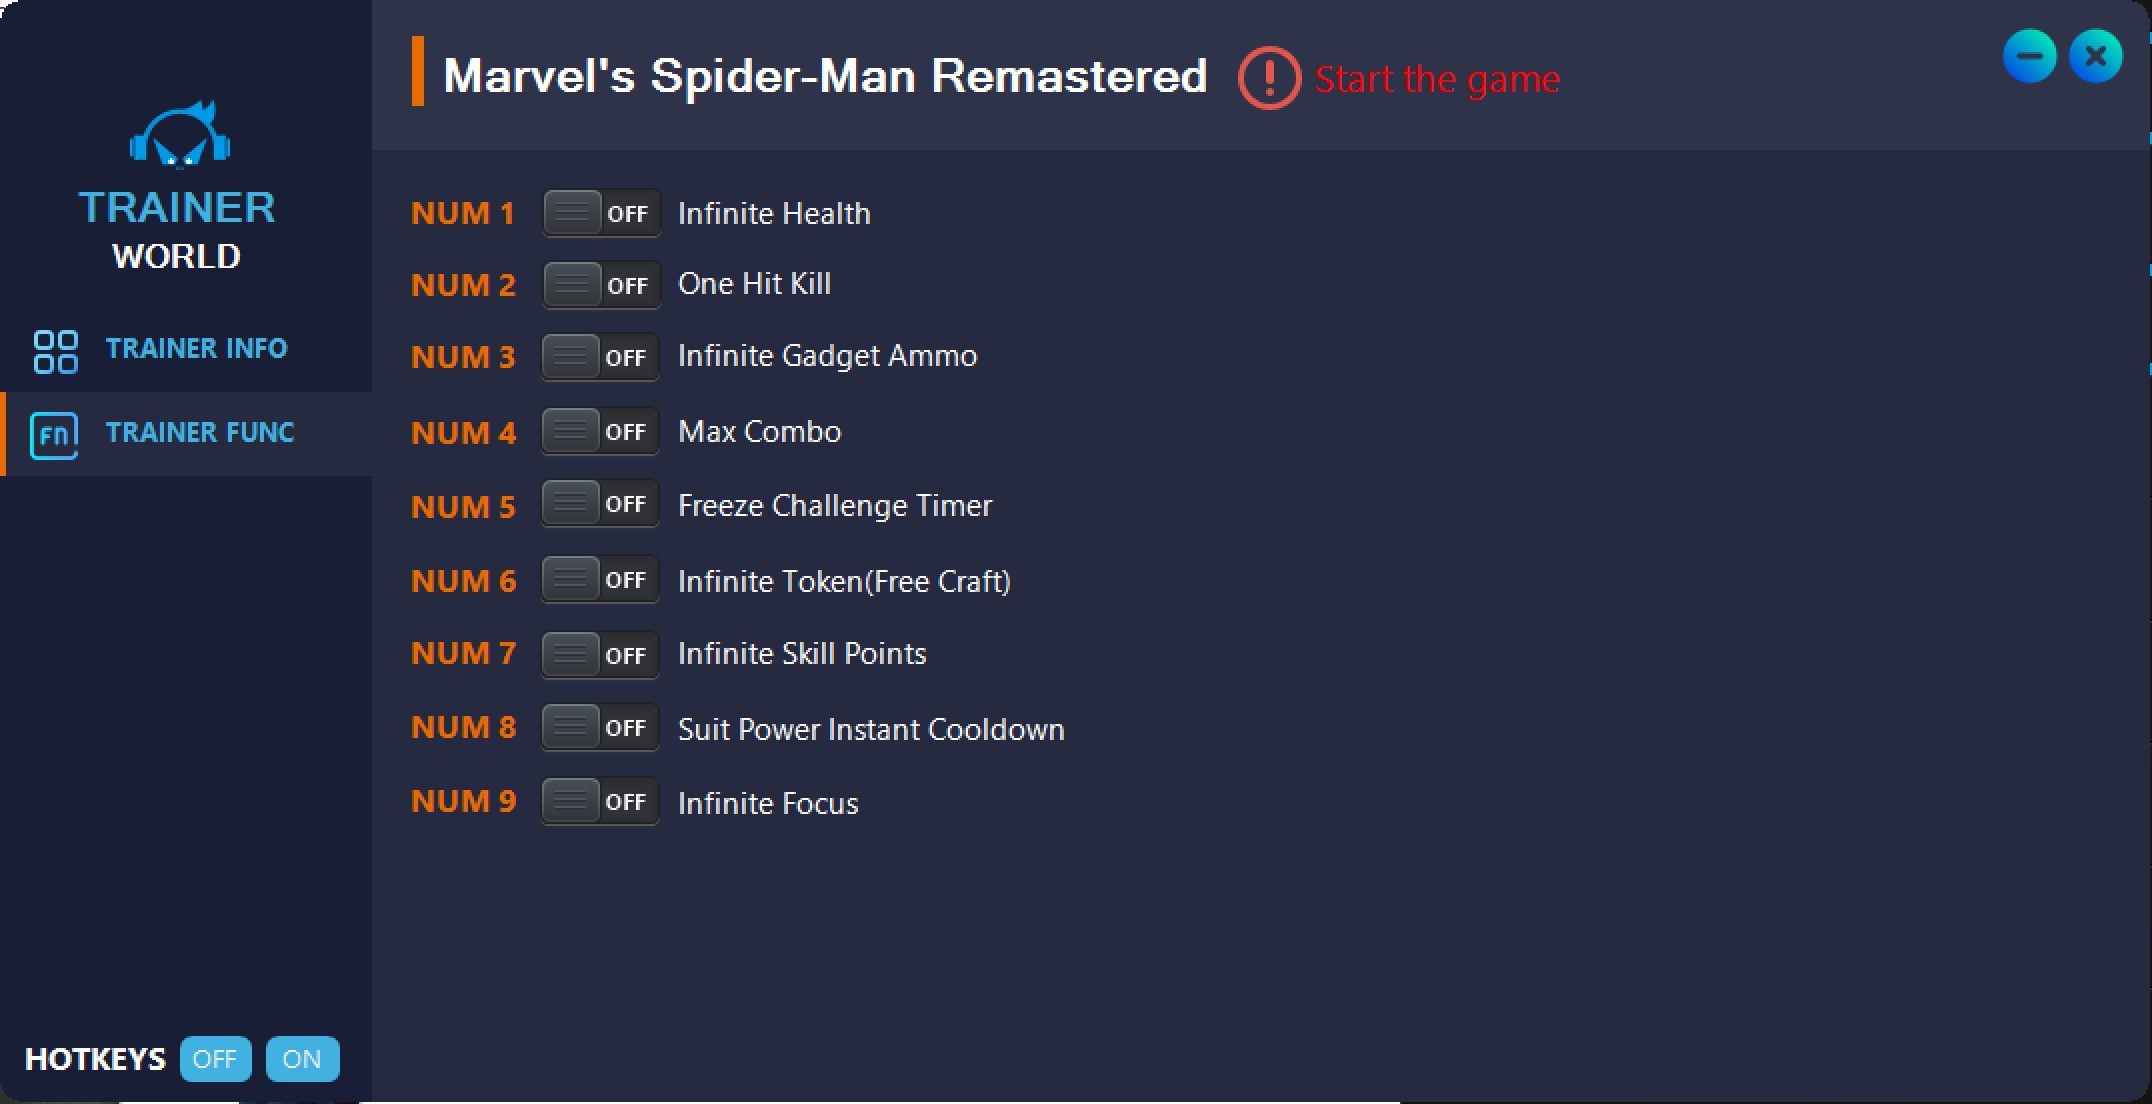 Marvel's Spider-Man Remastered v1.907.1.0 Trainer +9